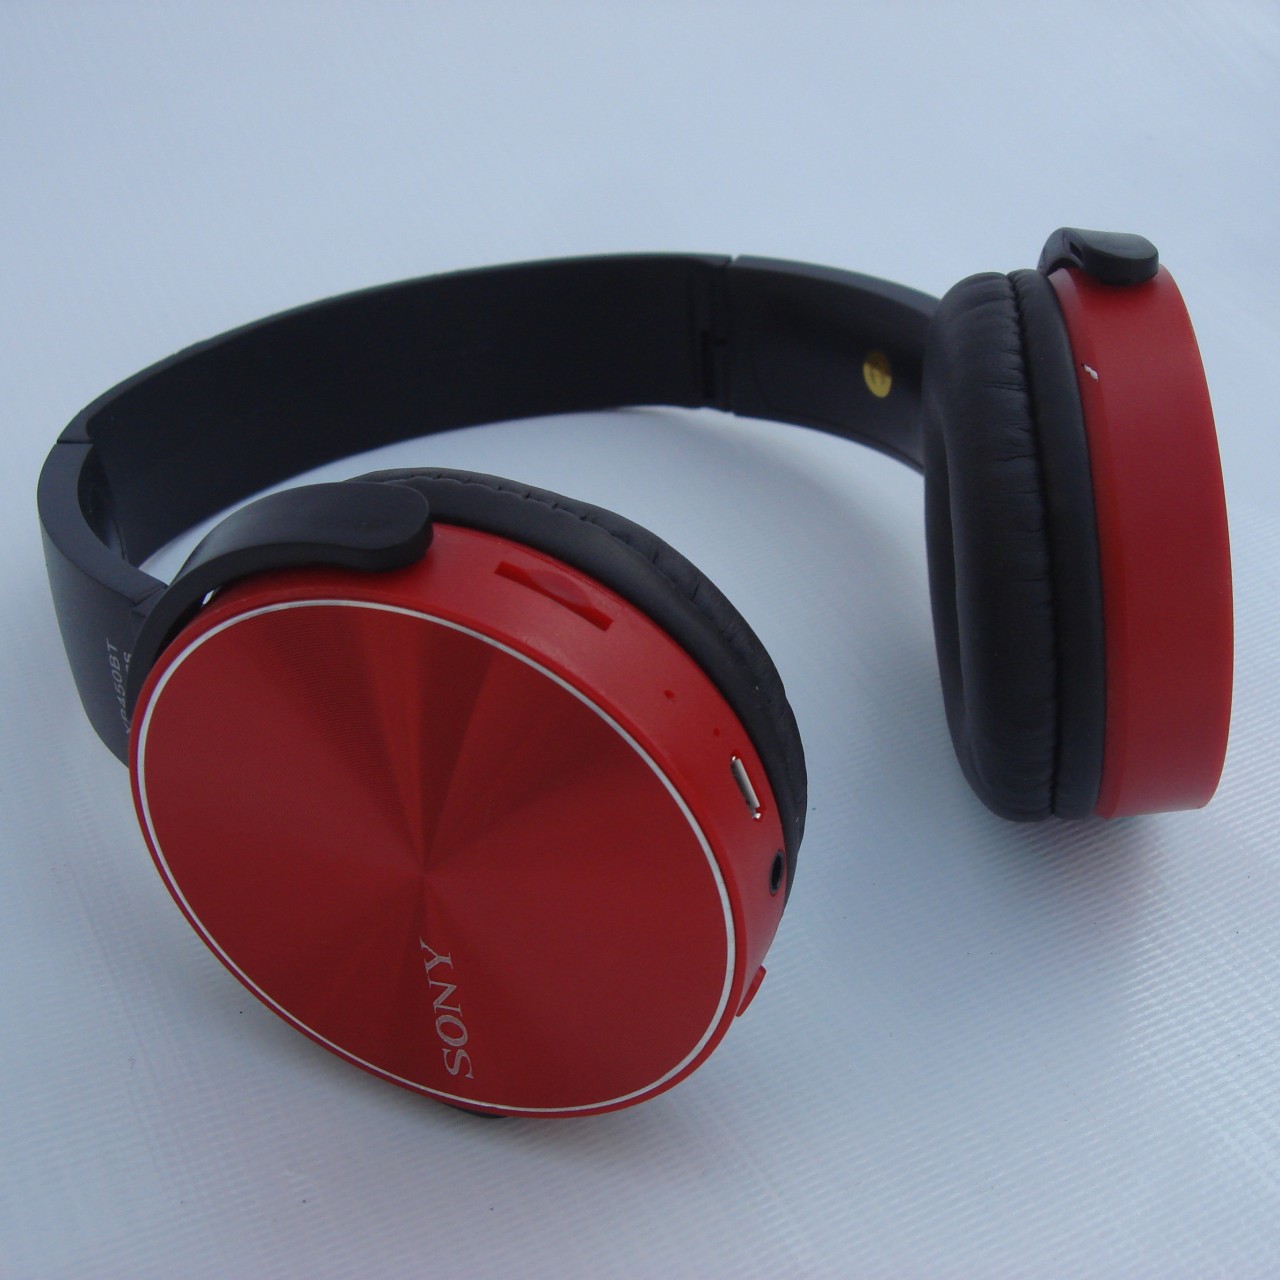 Sony 450BT On-Ear EXTRA BASS wireless Headphones - Red